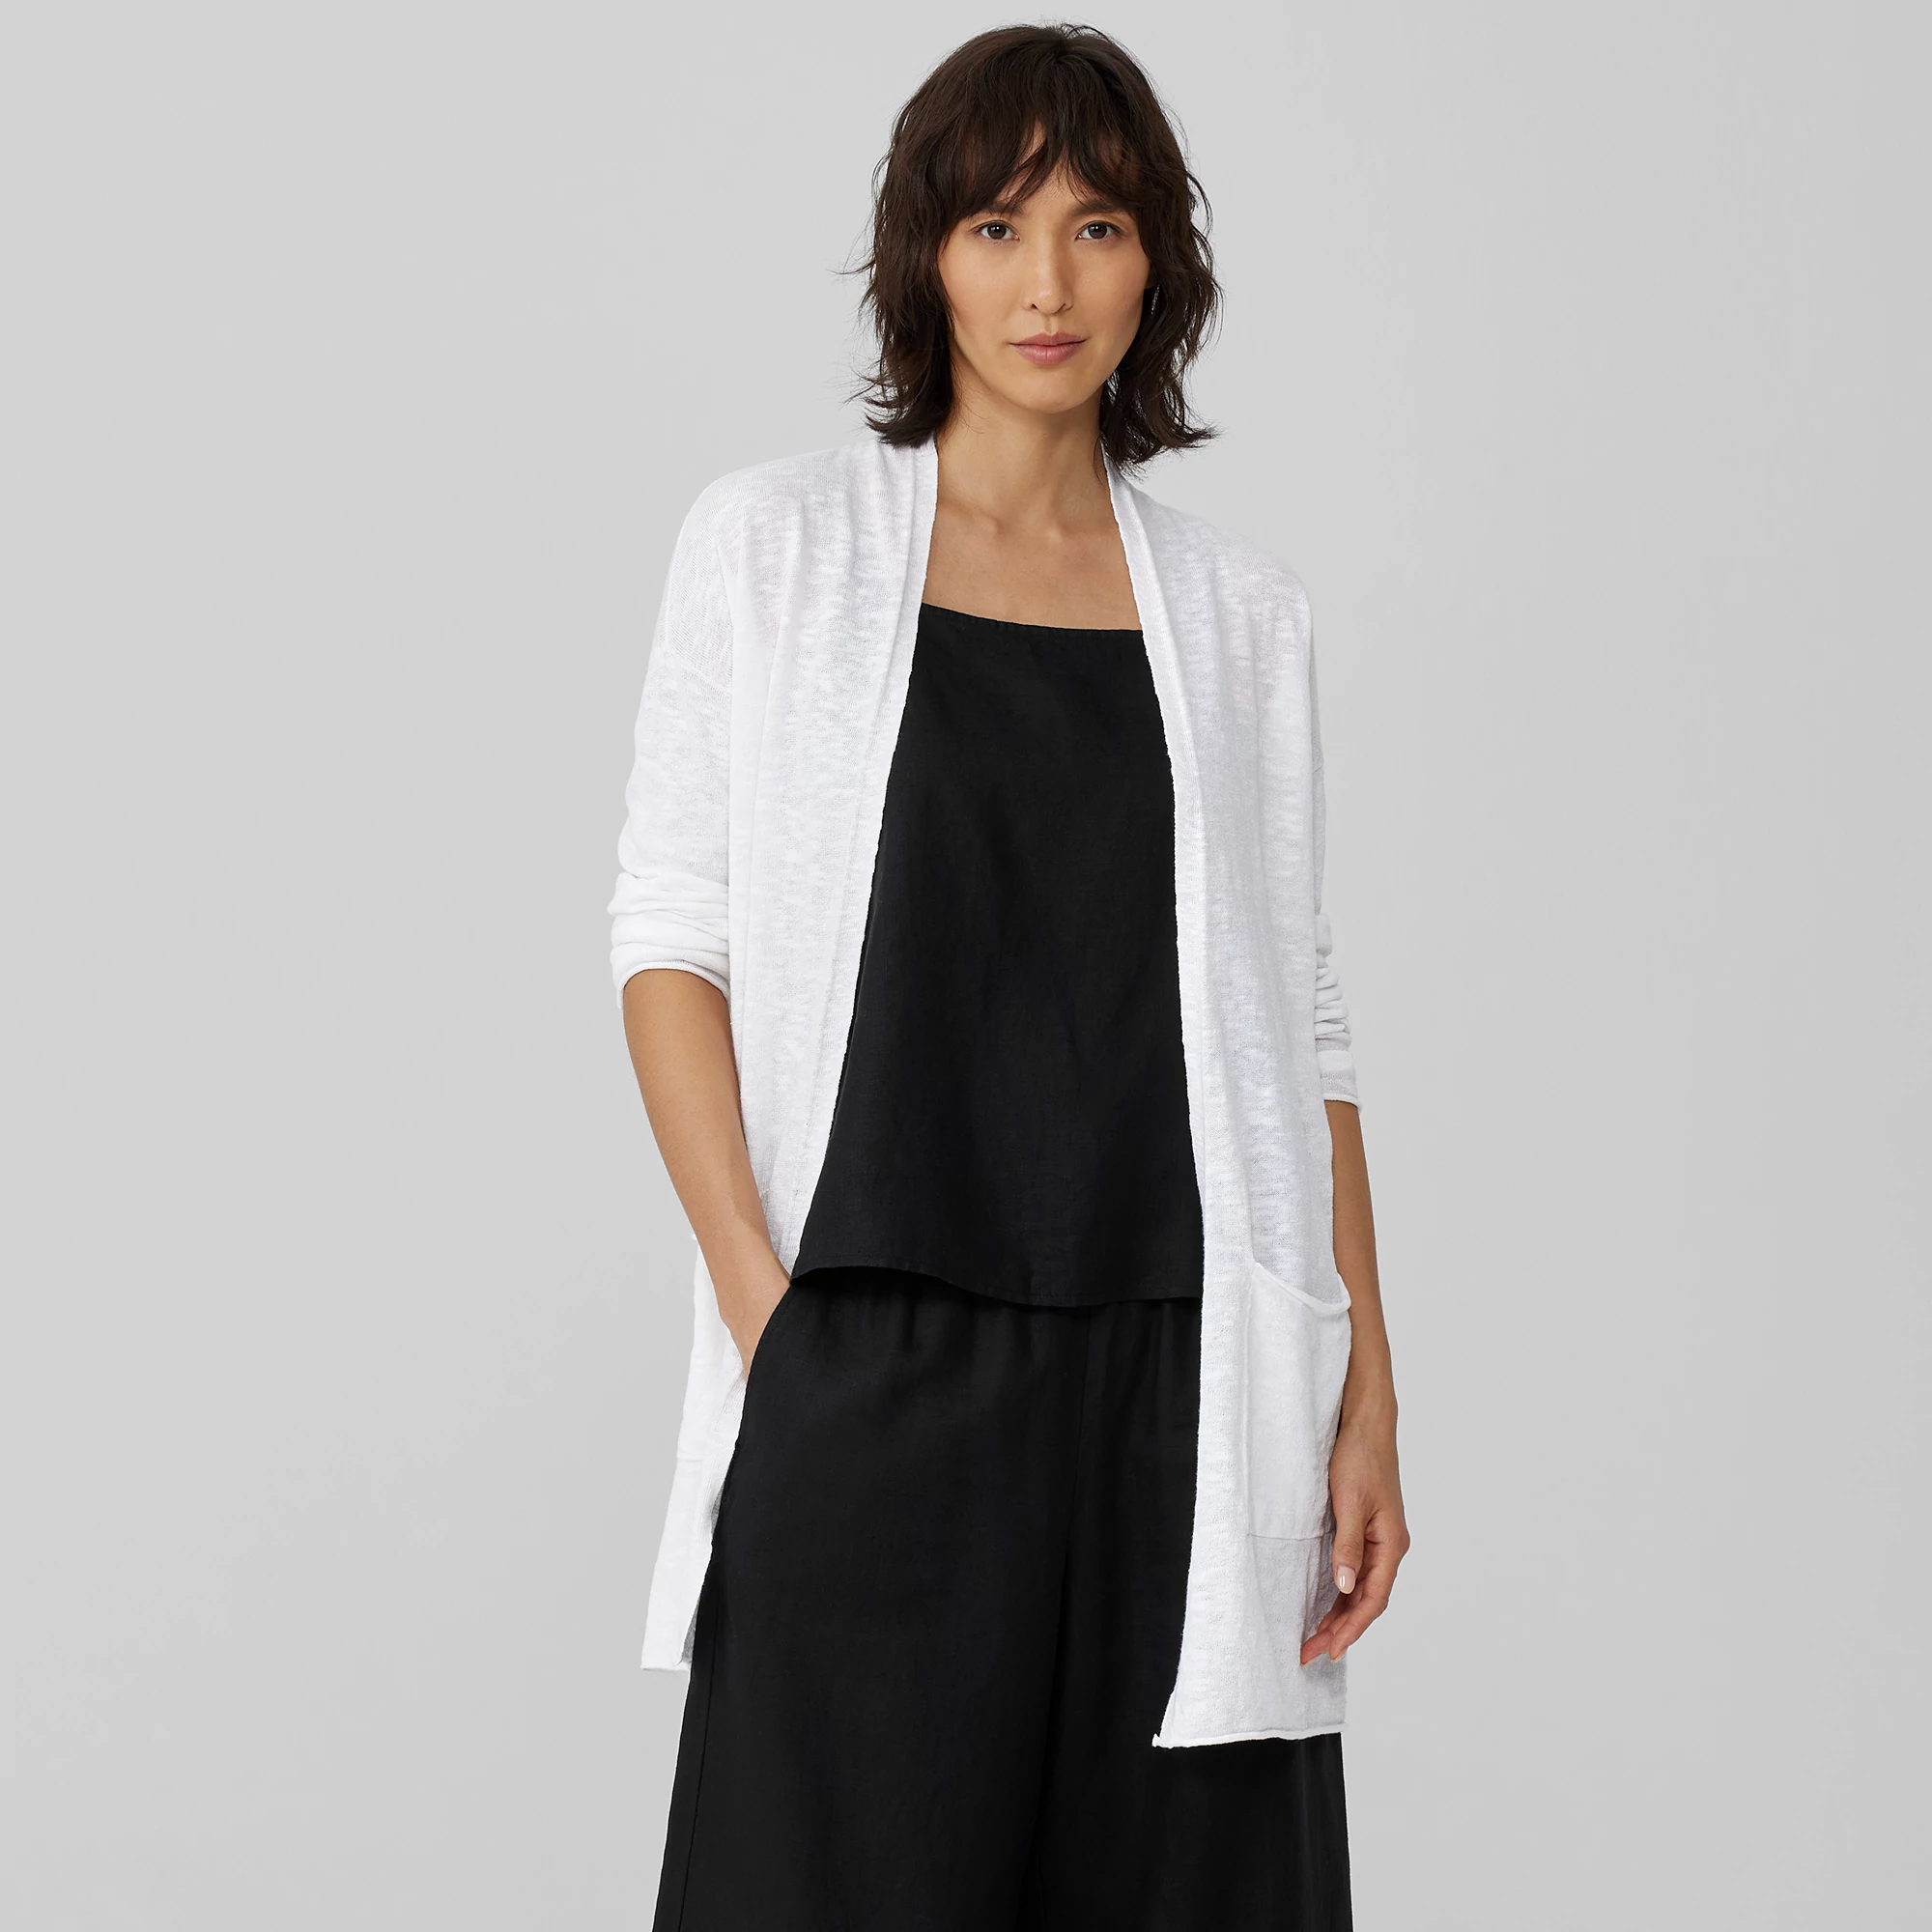 Off-white linen cardigan size L.